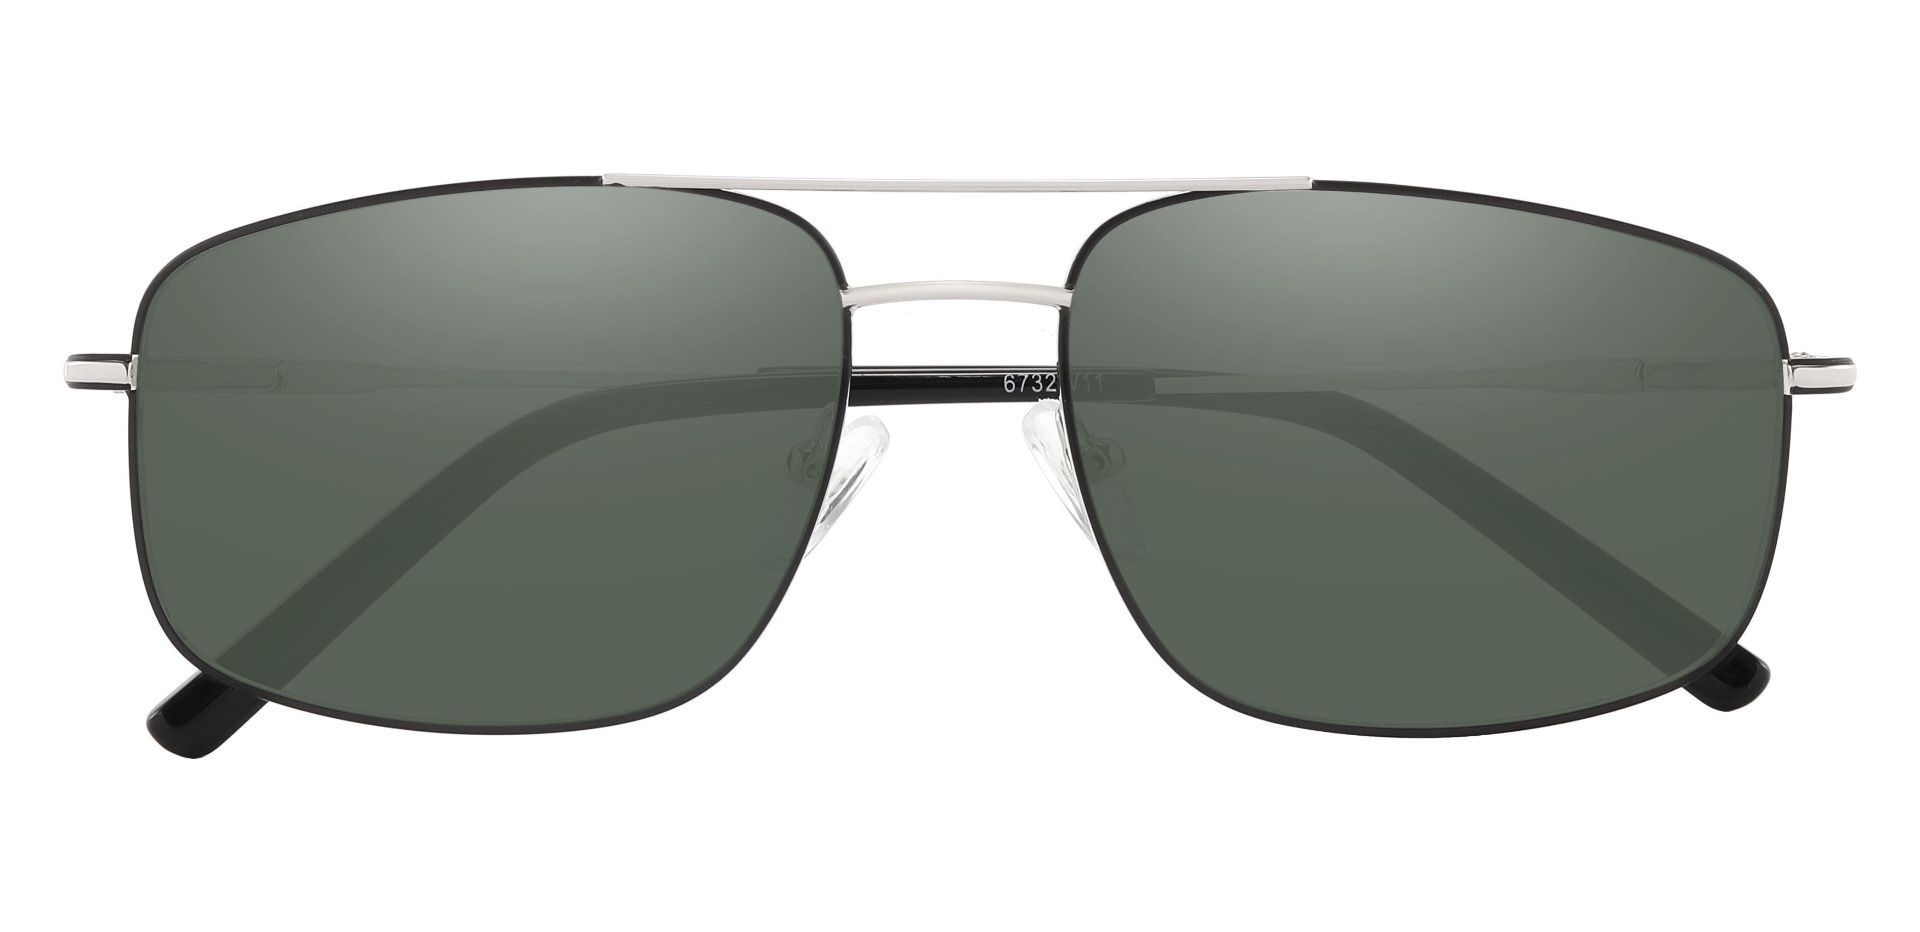 Turner Aviator Prescription Sunglasses - Silver Frame With Green Lenses